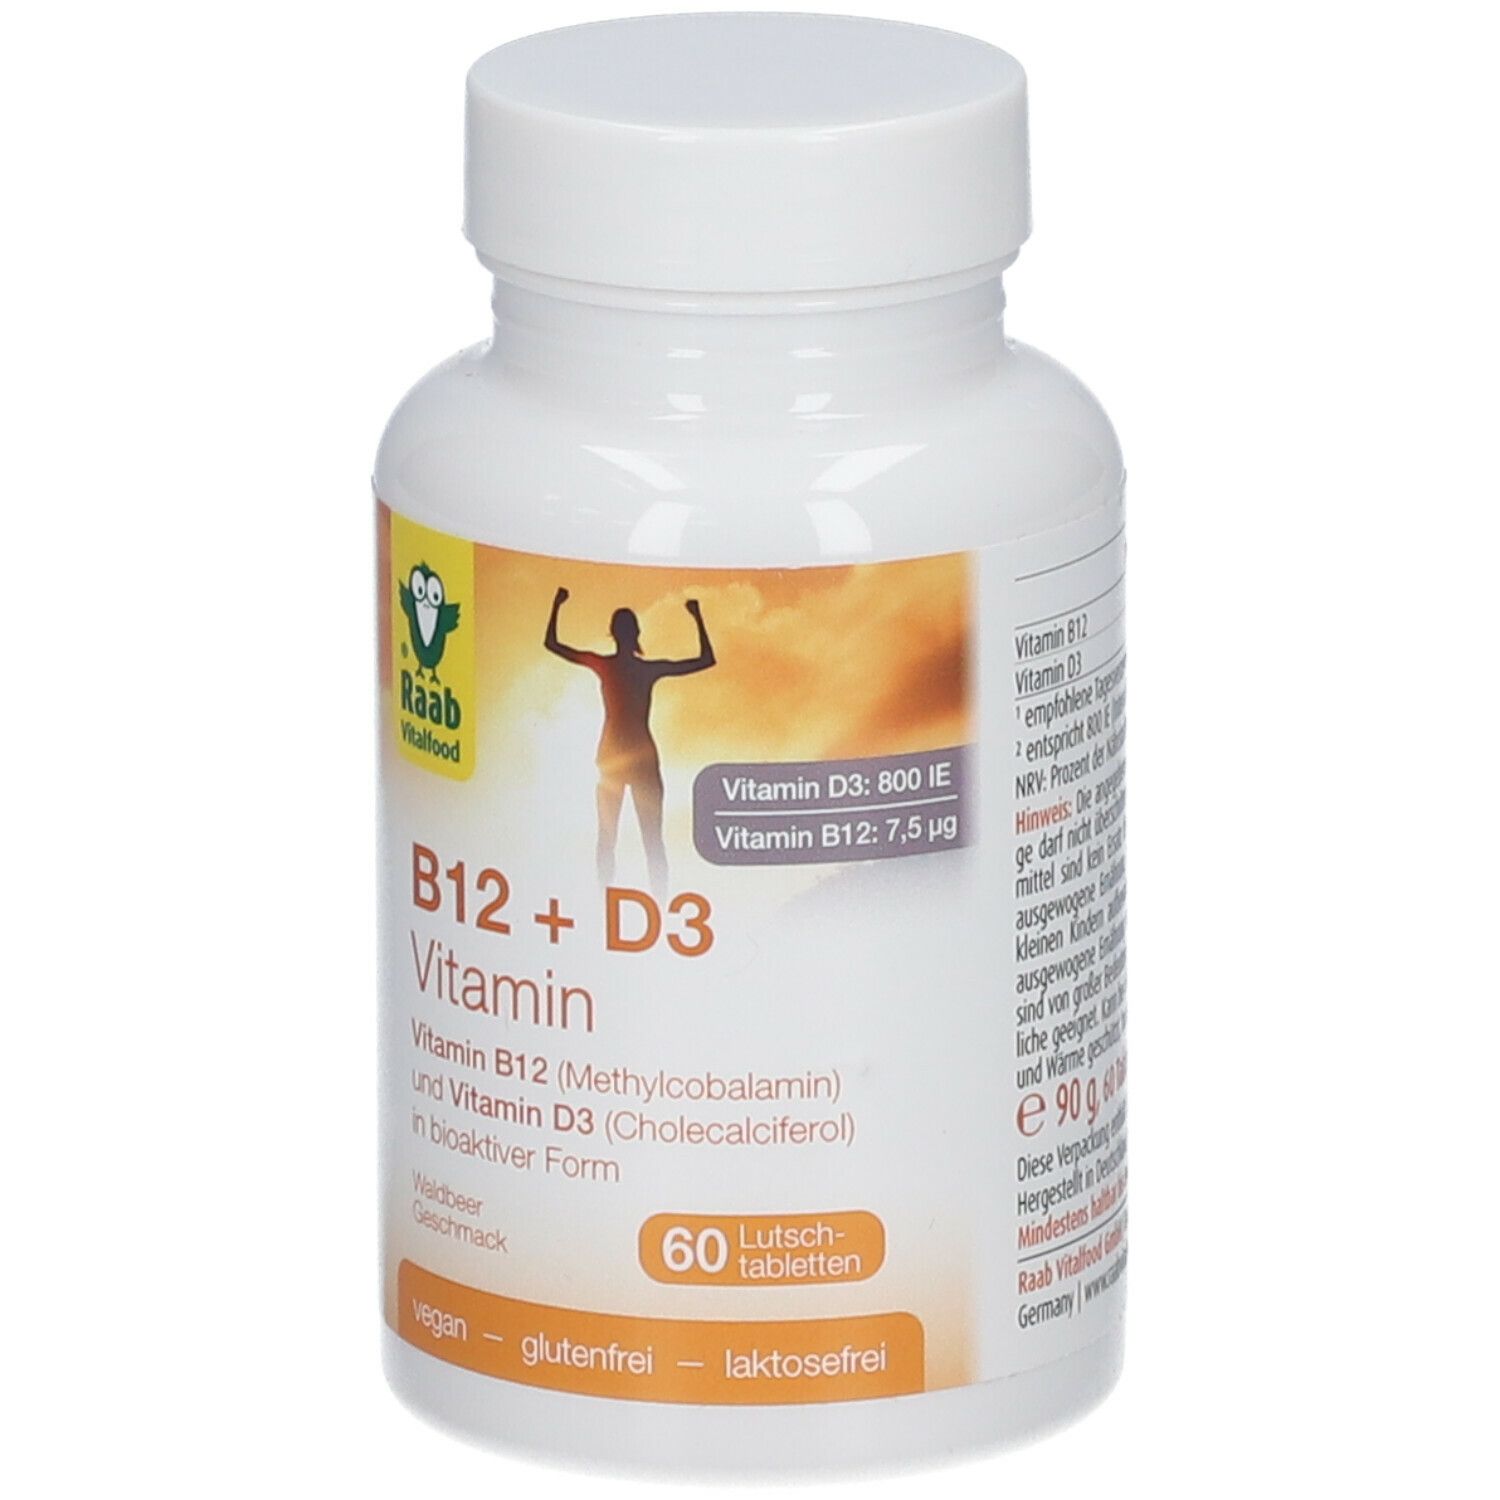 Raab Vitamin B12 + D3